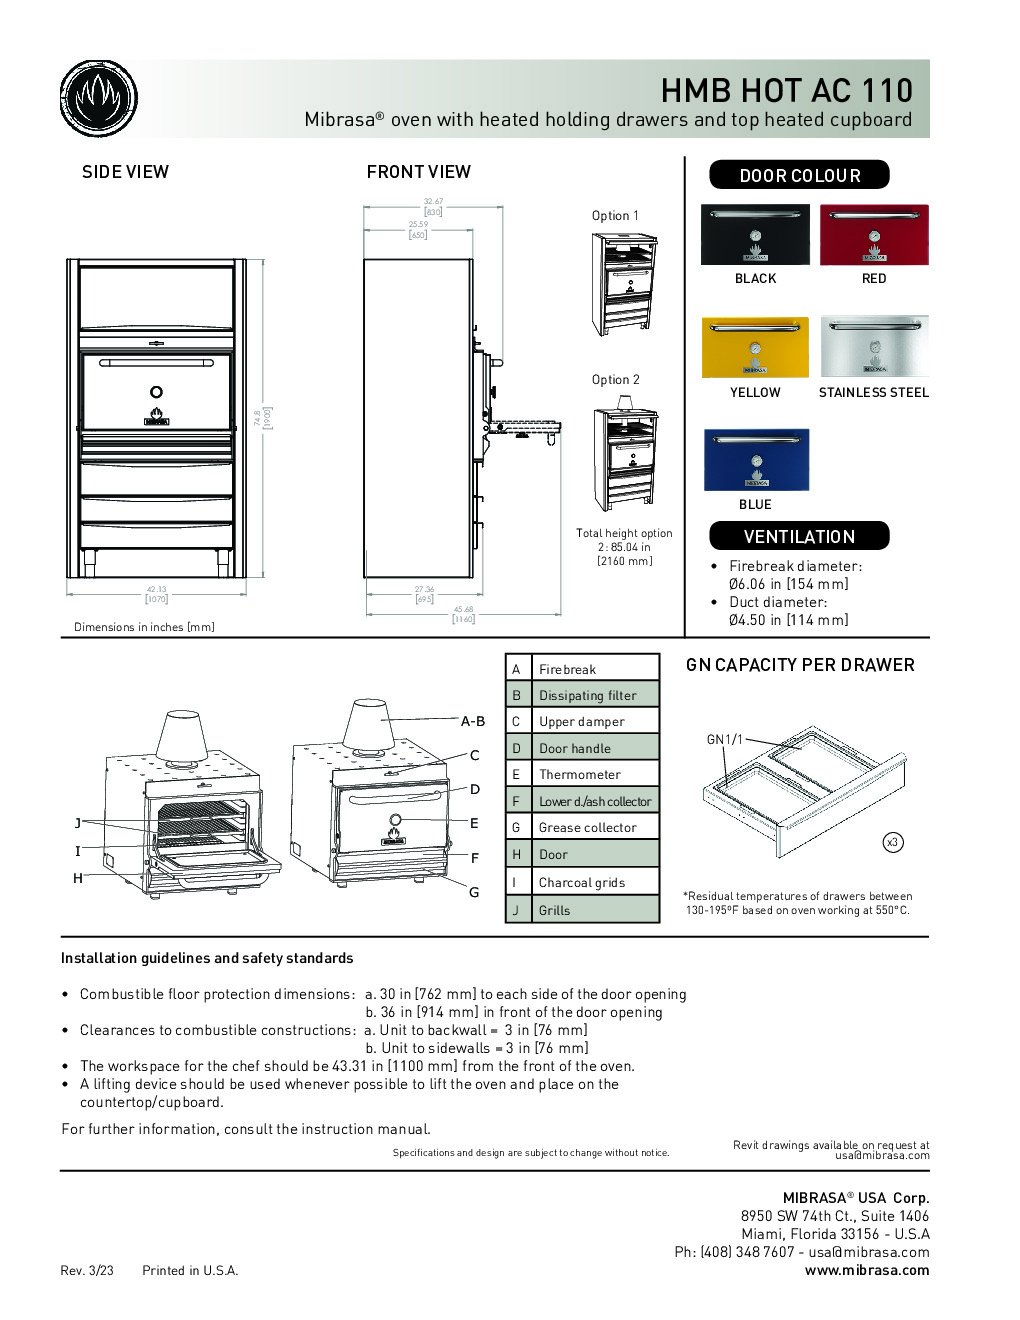 Mibrasa HMB HOT AC 110 Charcoal Broiler Oven